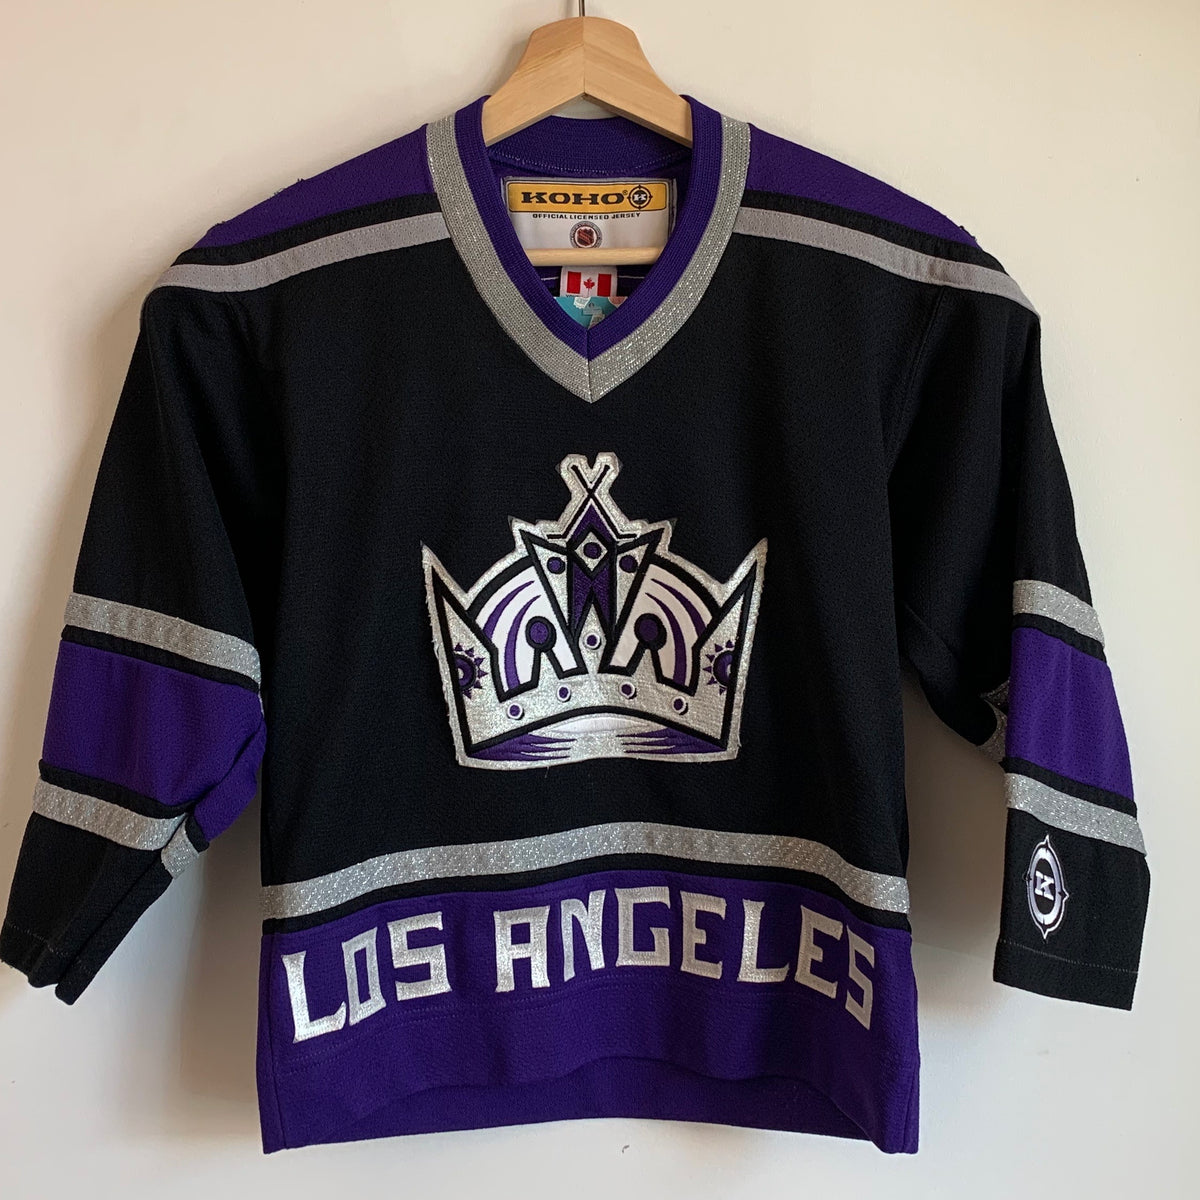 Los Angeles Kings Game Used NHL Jerseys